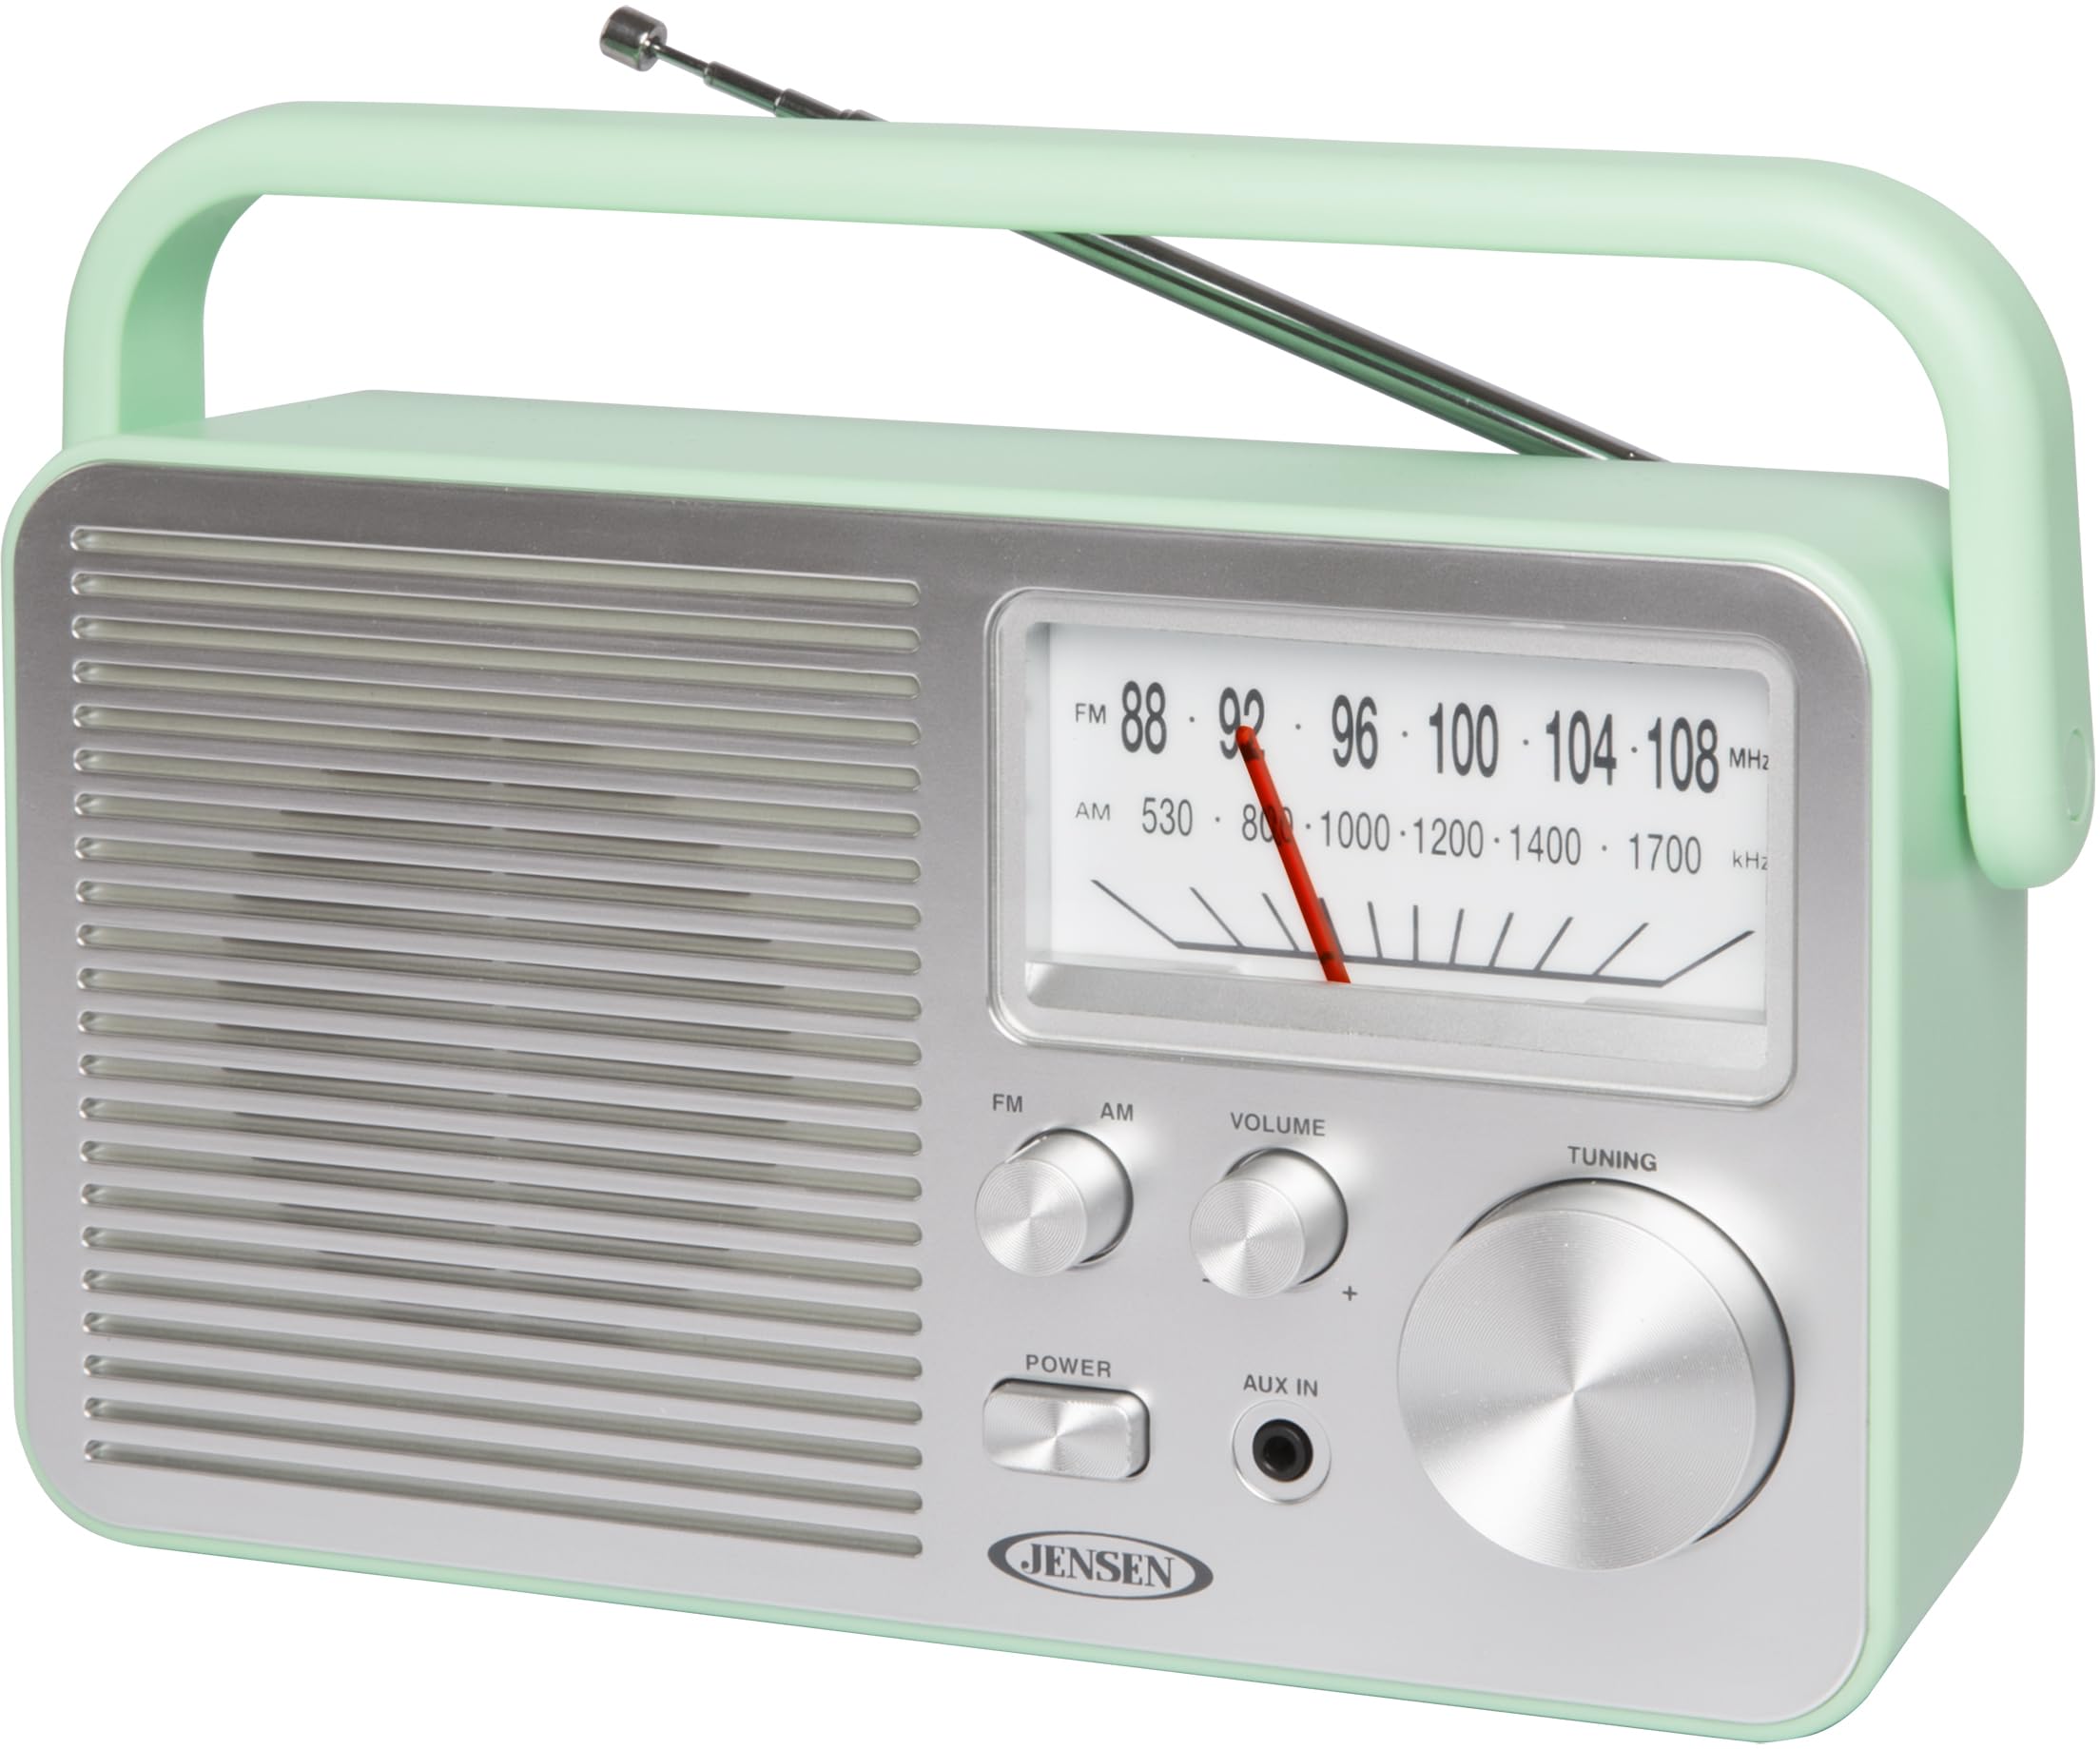 JENSEN MR-750GR GREEN PORTABLE AM/FM RADIO